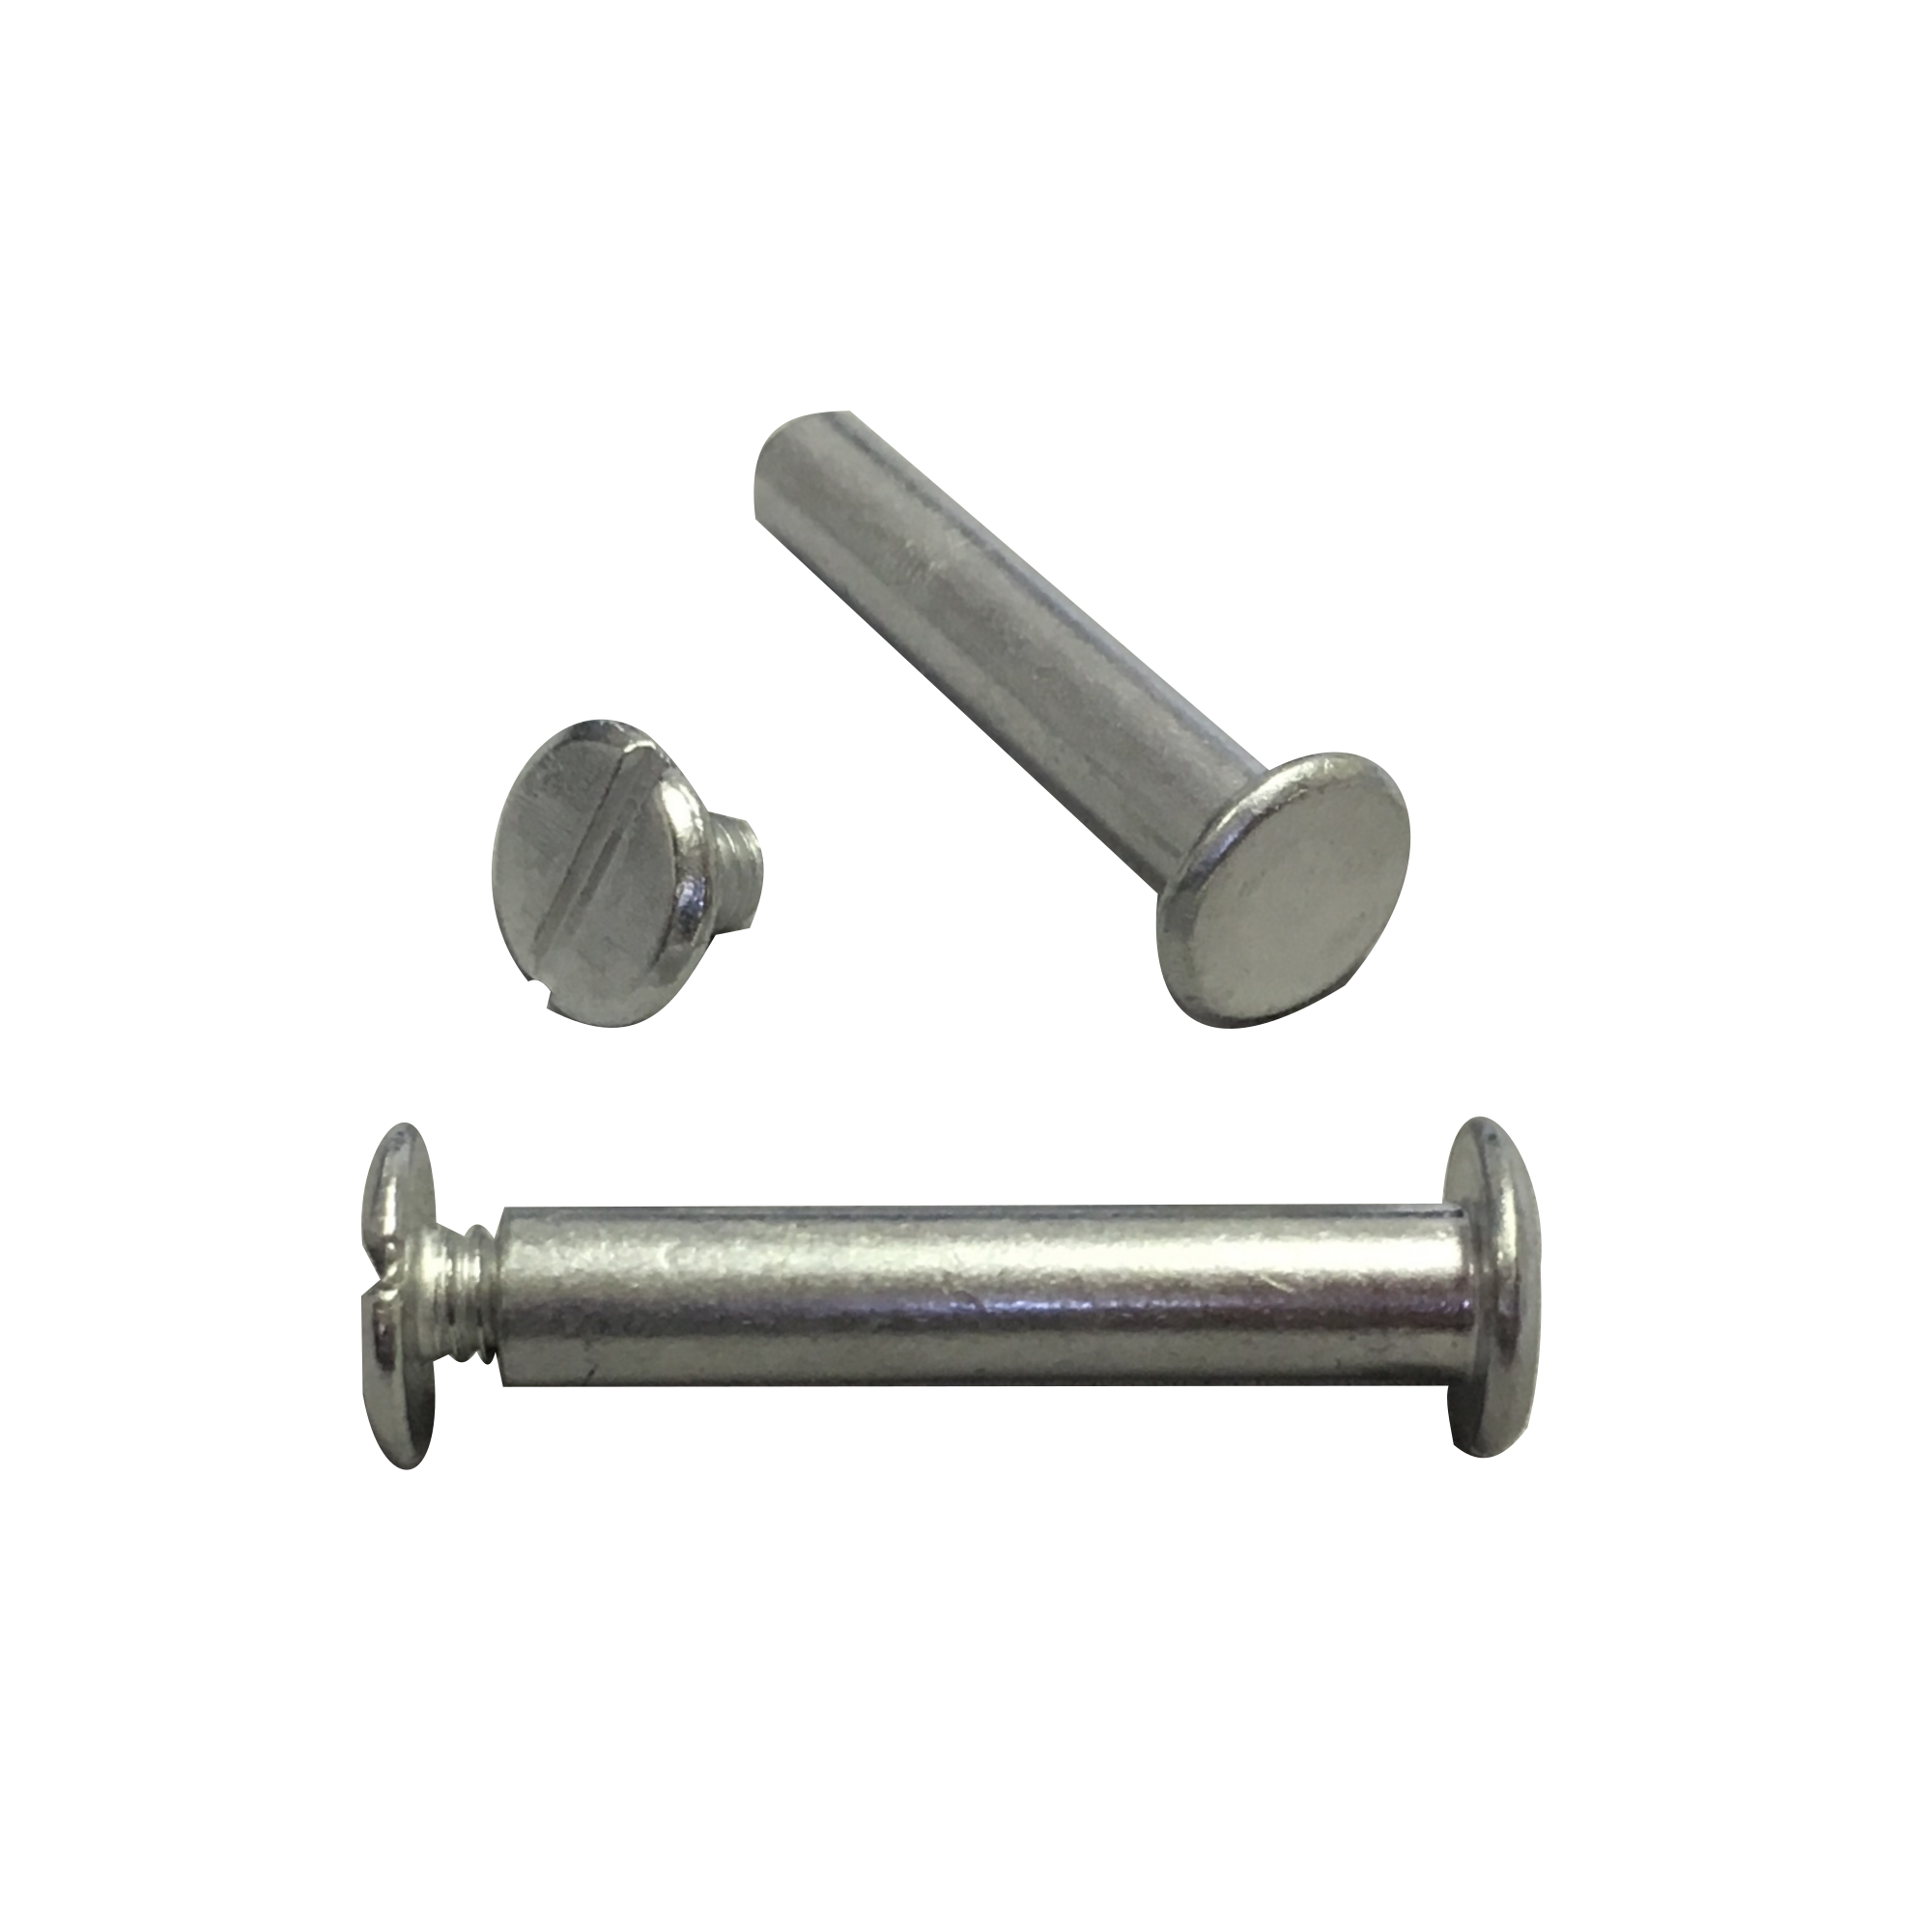 Silver Aluminum Screw Posts, 2", 100 pack - RingBinderDepot.com